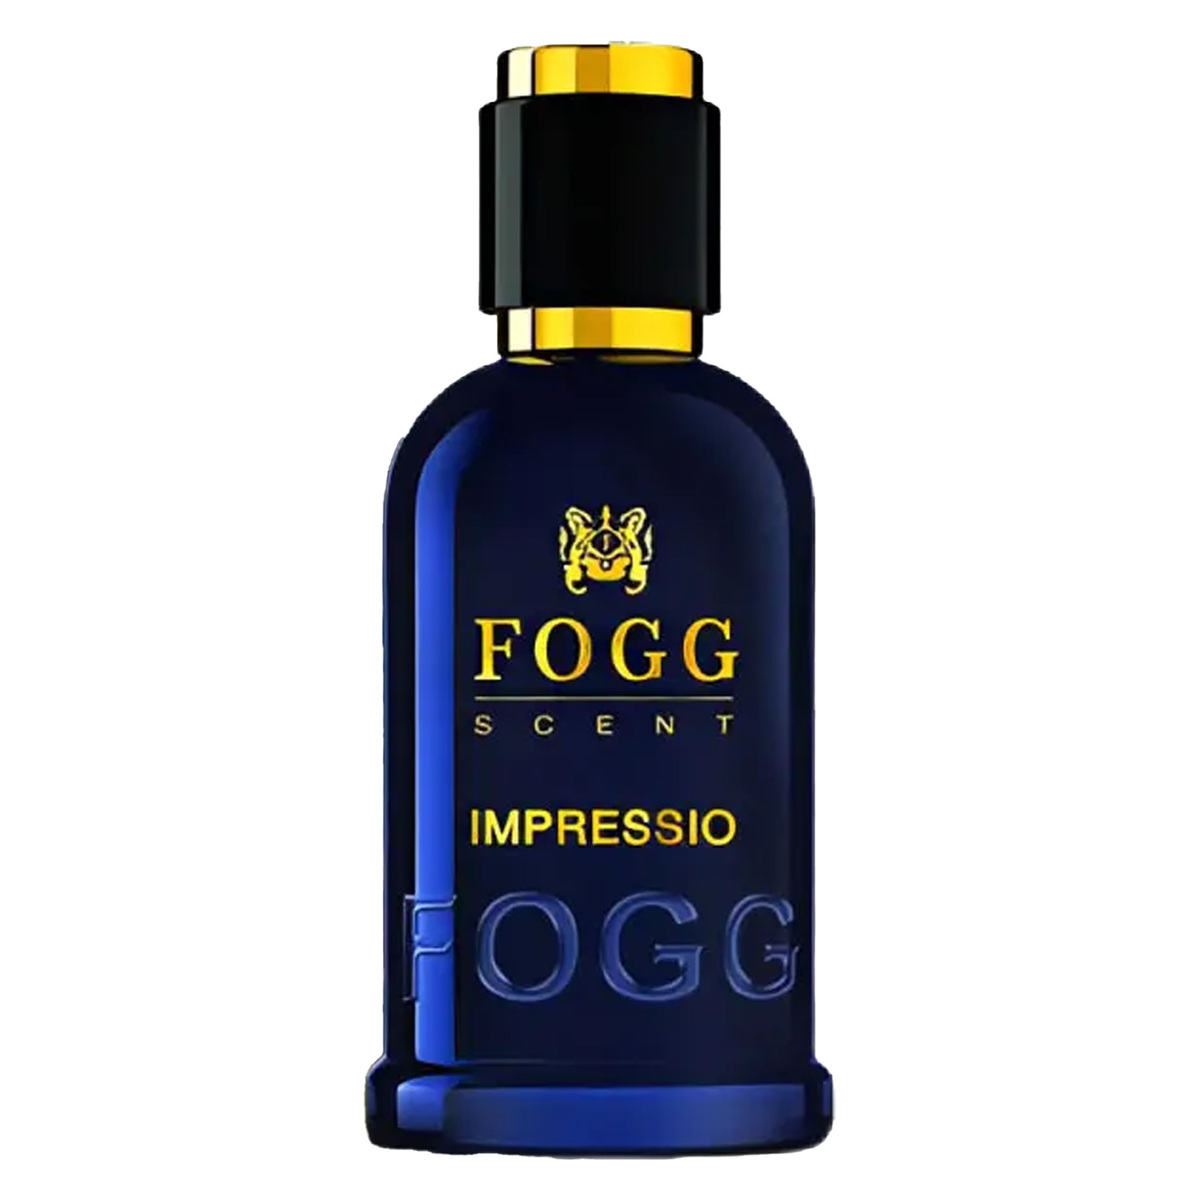 Fogg Scent Impressio EDP For Men 100 ml